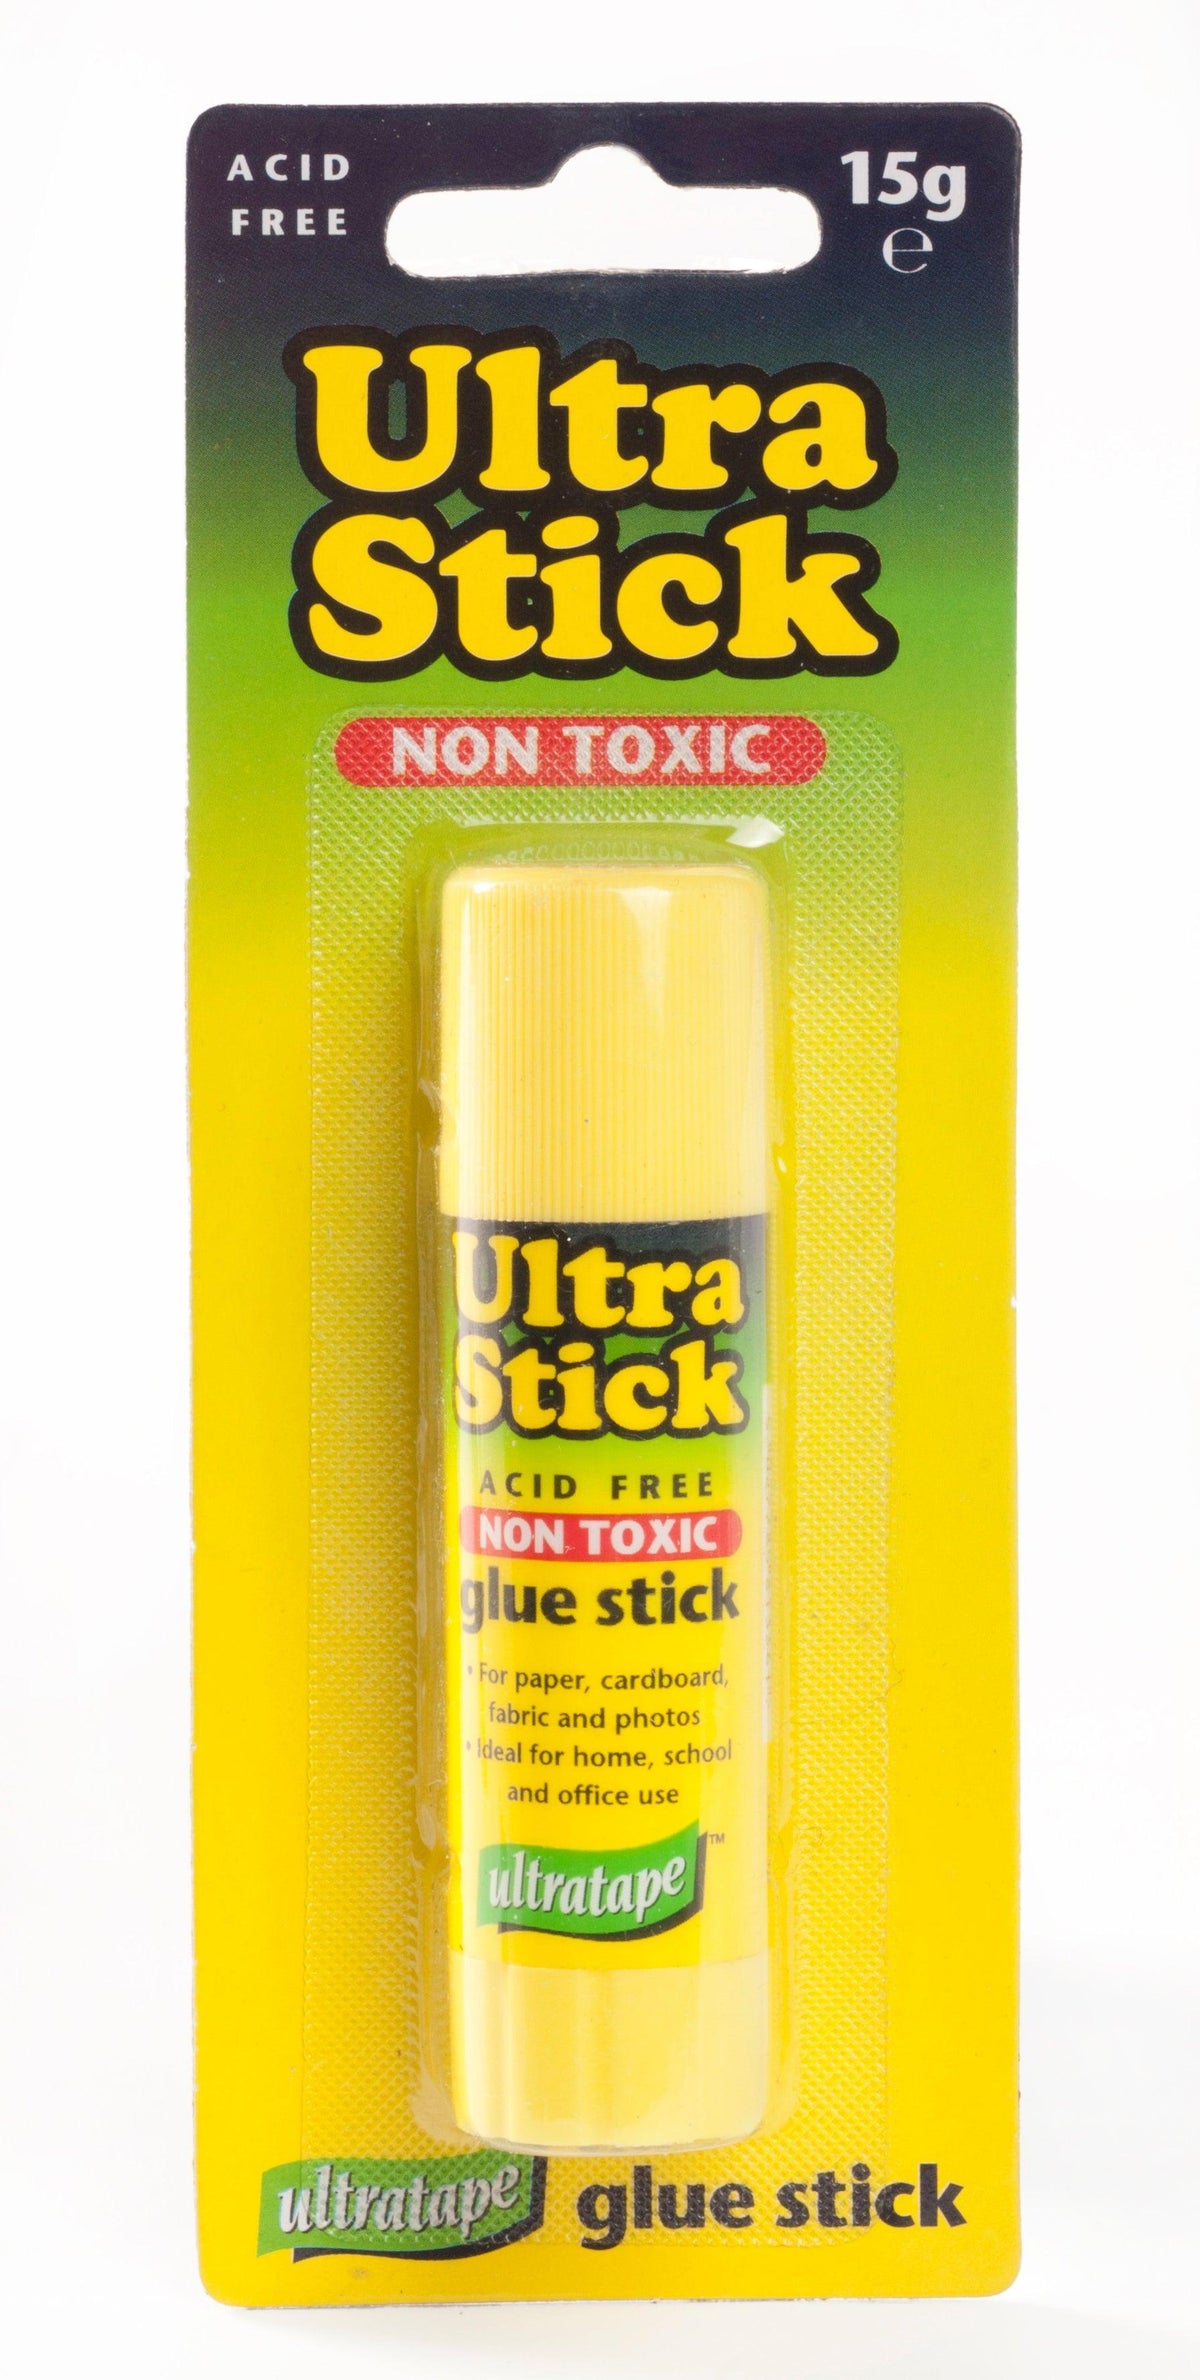 Ultratape Handy Glue Stick - Choice Stores